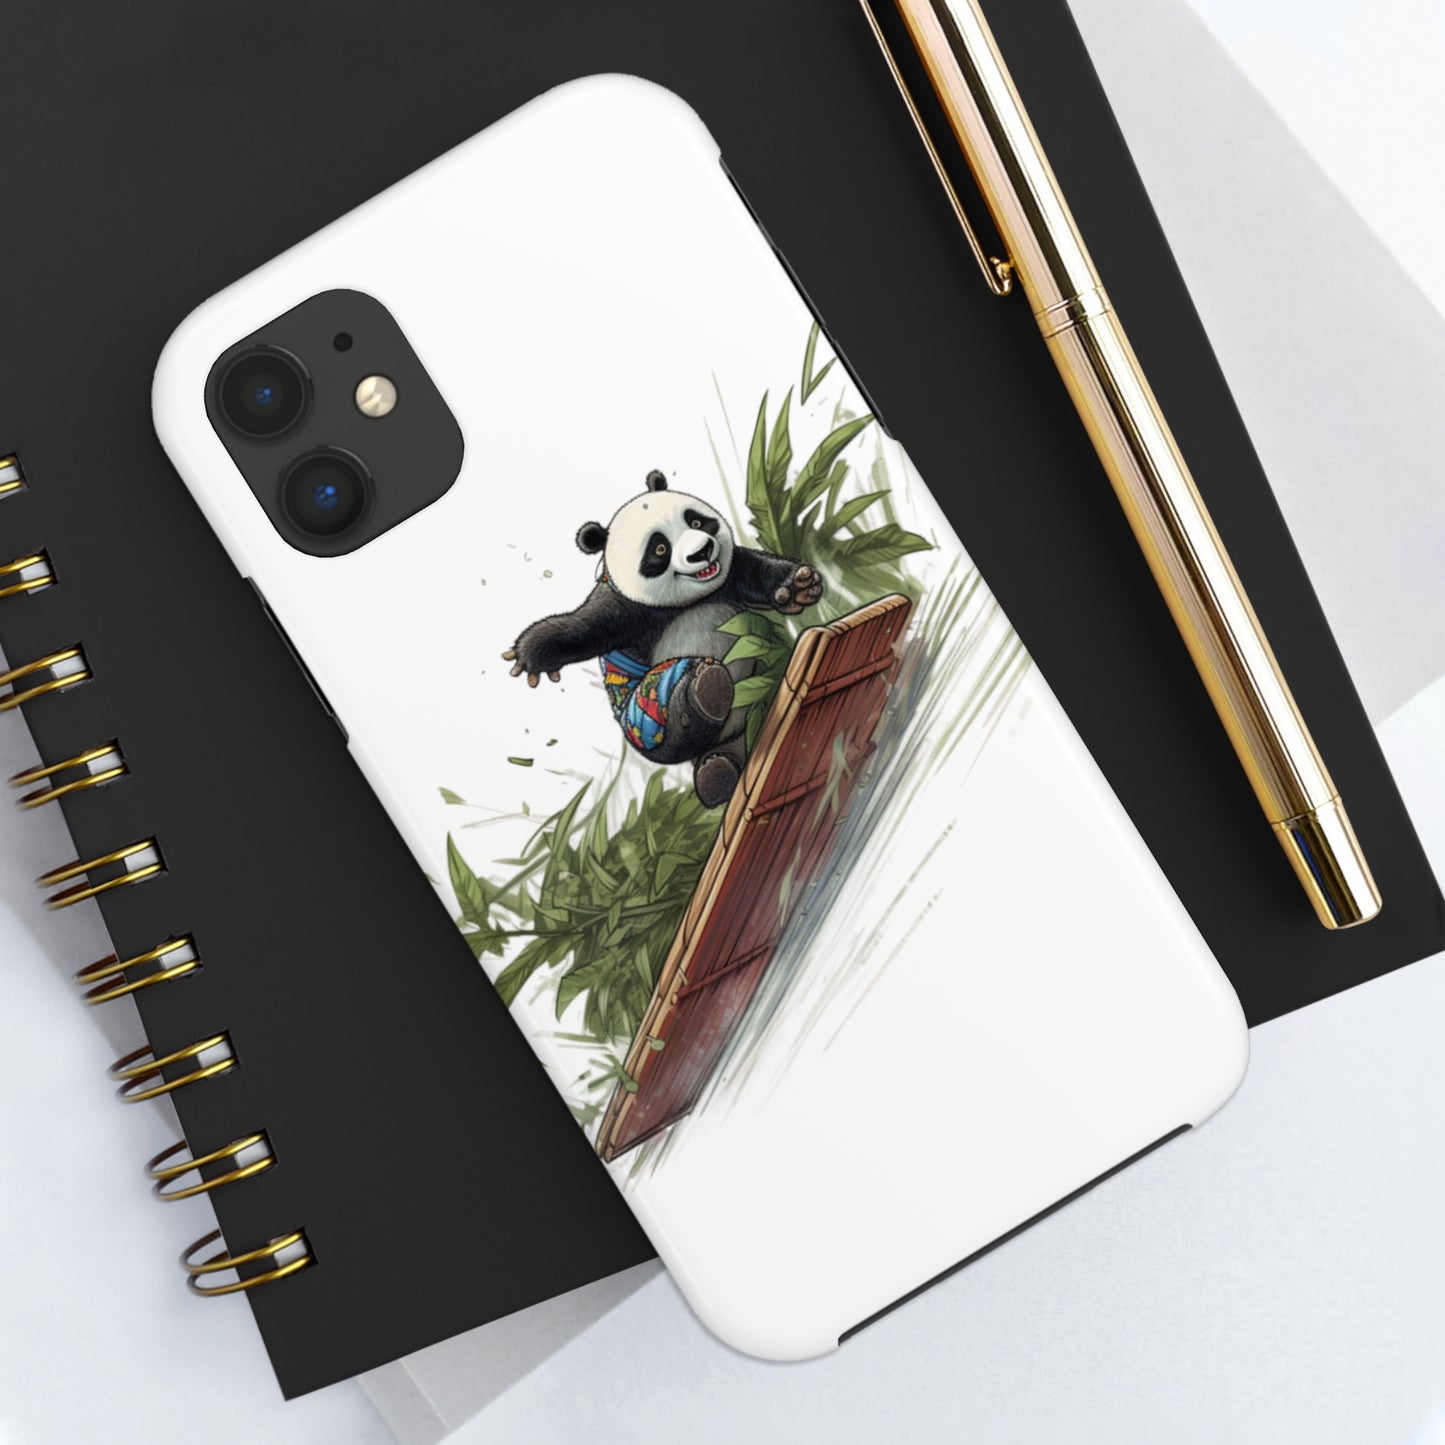 Panda Skateboard Phone Case